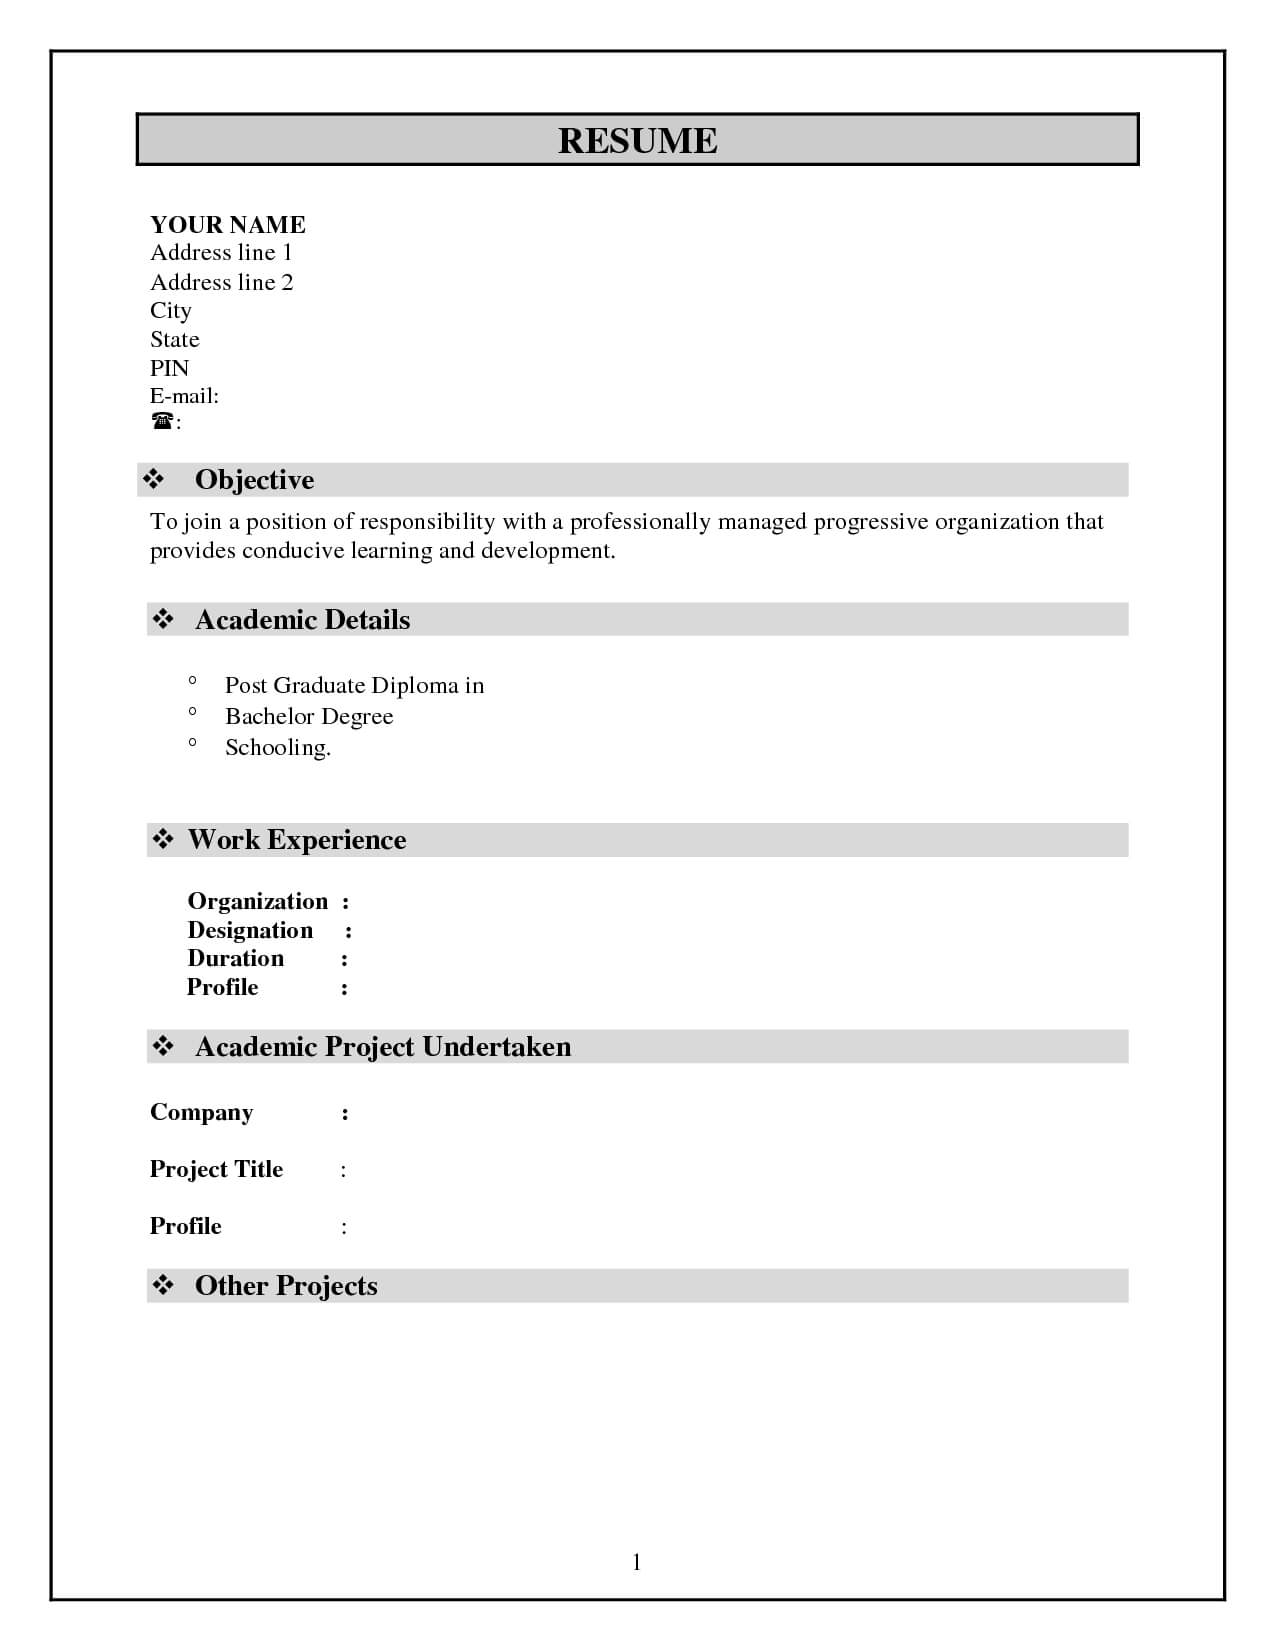 Resume Format In Microsoft Word 2007 – Ironi.celikdemirsan In Resume Templates Word 2007